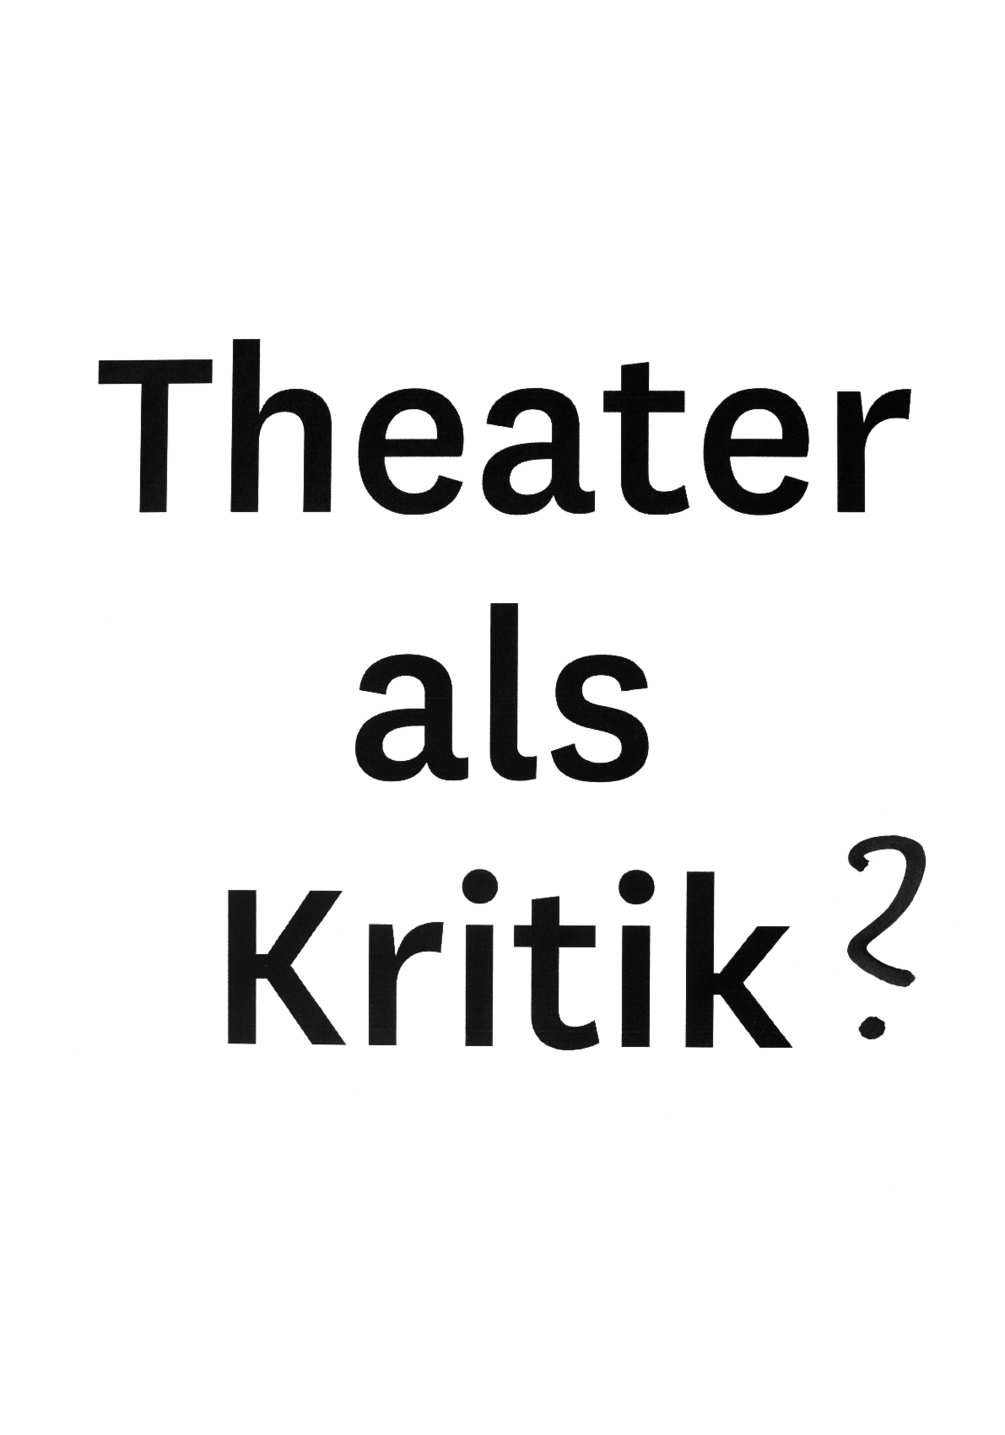 theater-as-critique-slip-23-1005x1435px